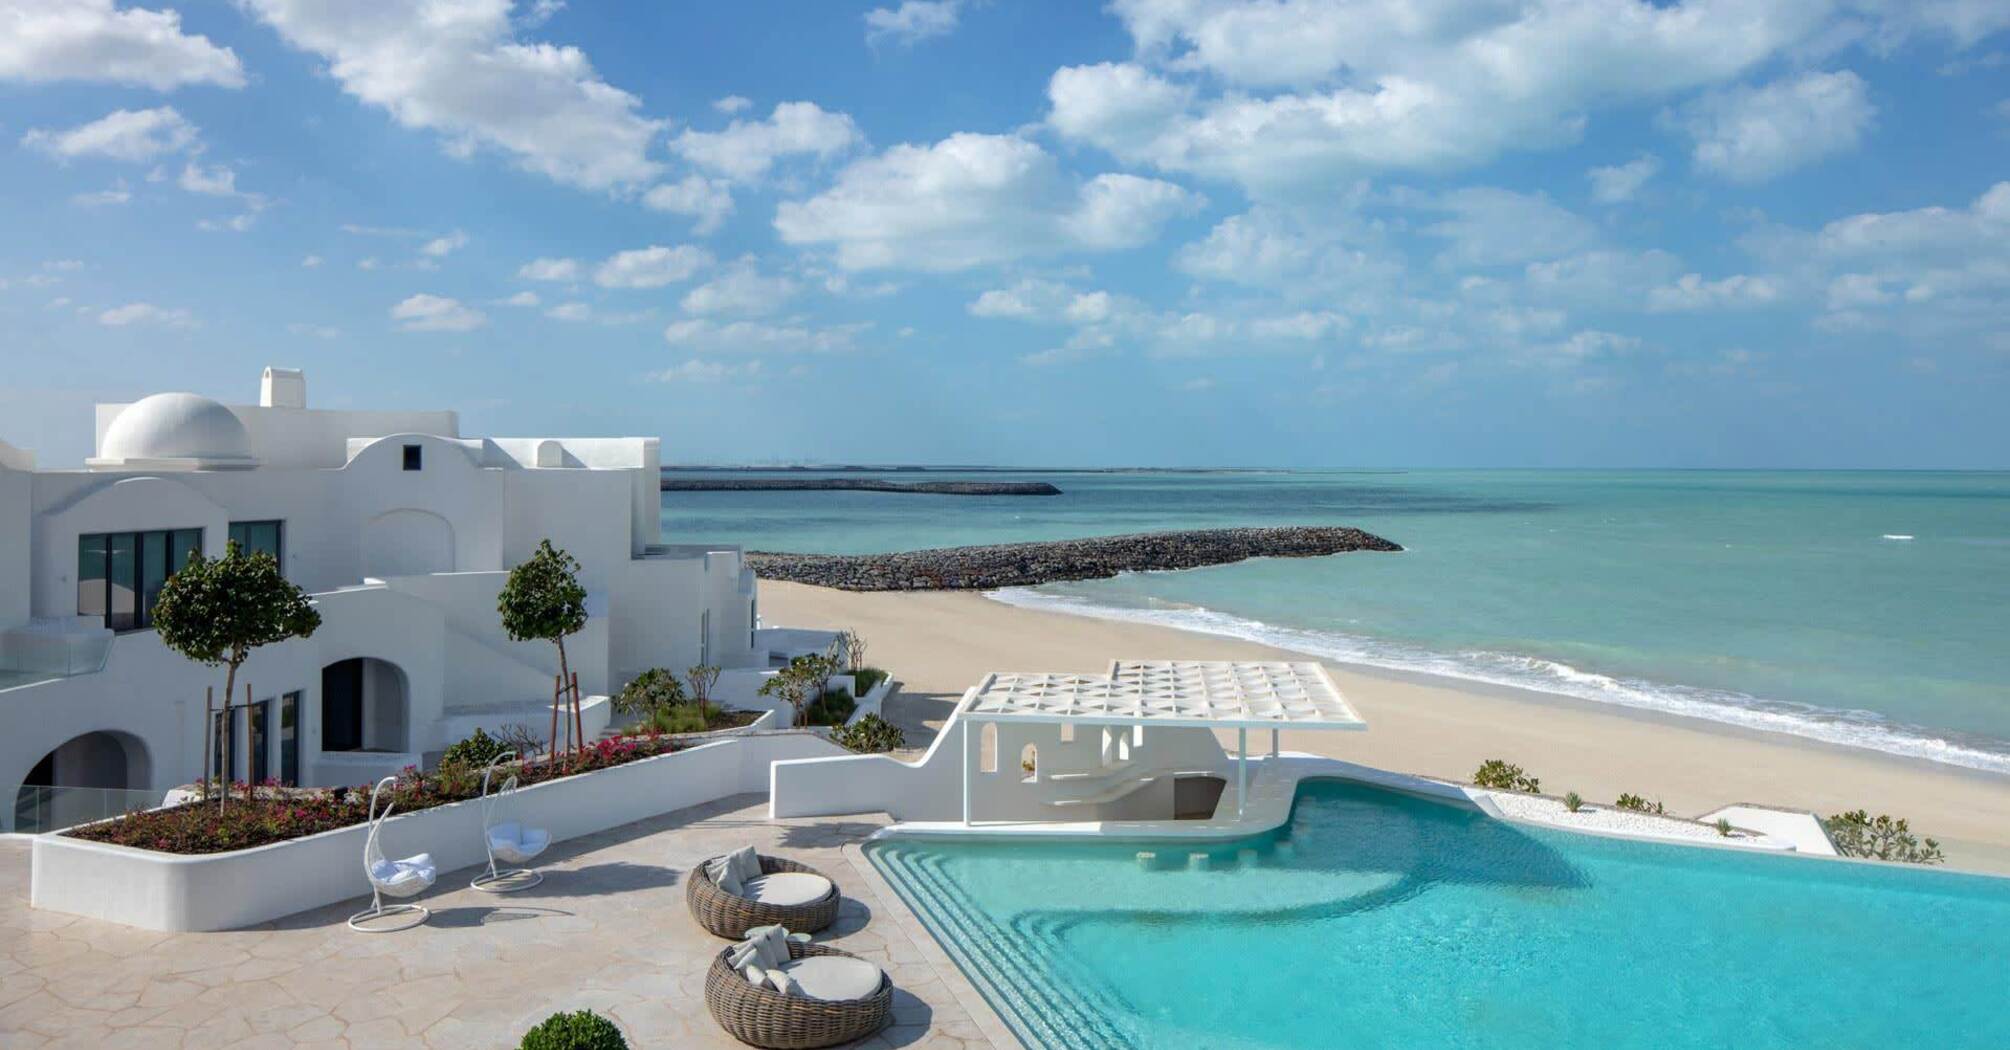 Anantara Santorini Abu Dhabi invites guests to relax